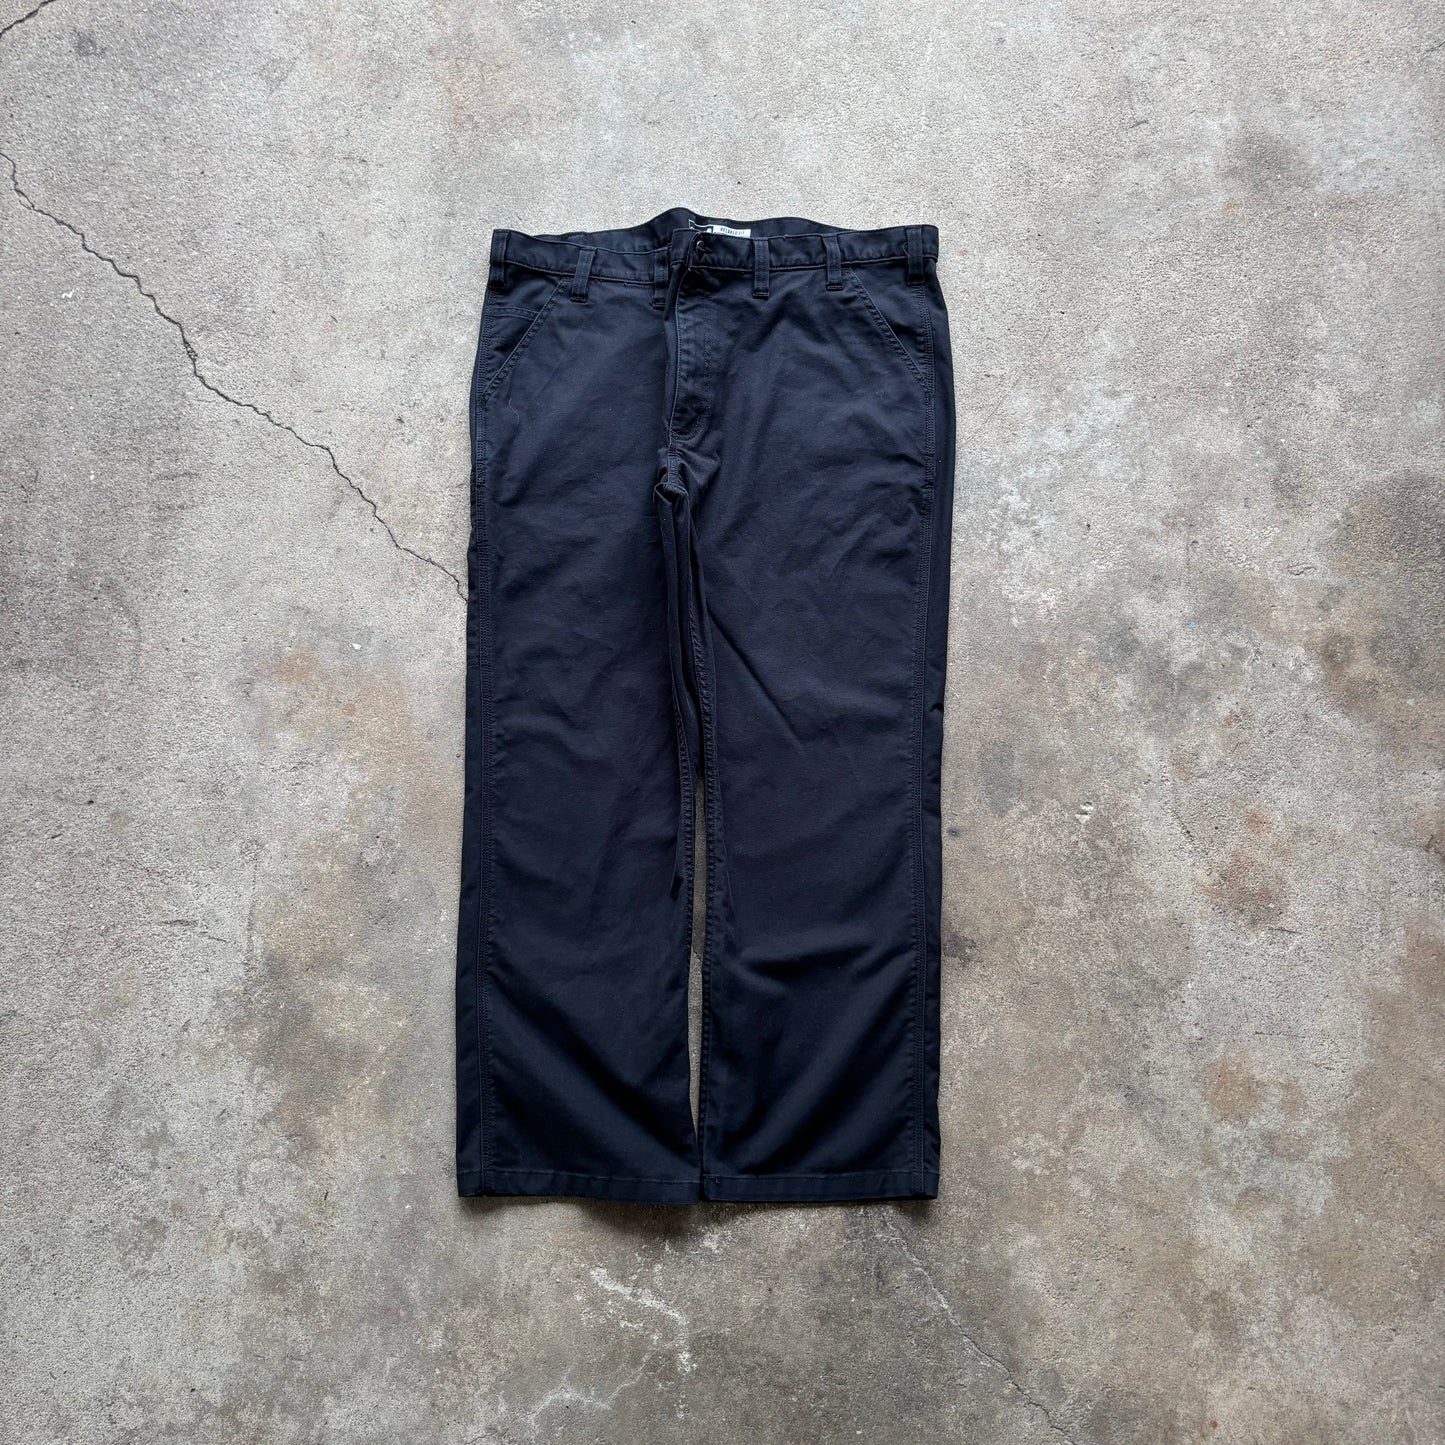 Carhartt Black Carpenter Pants [44 x 30]